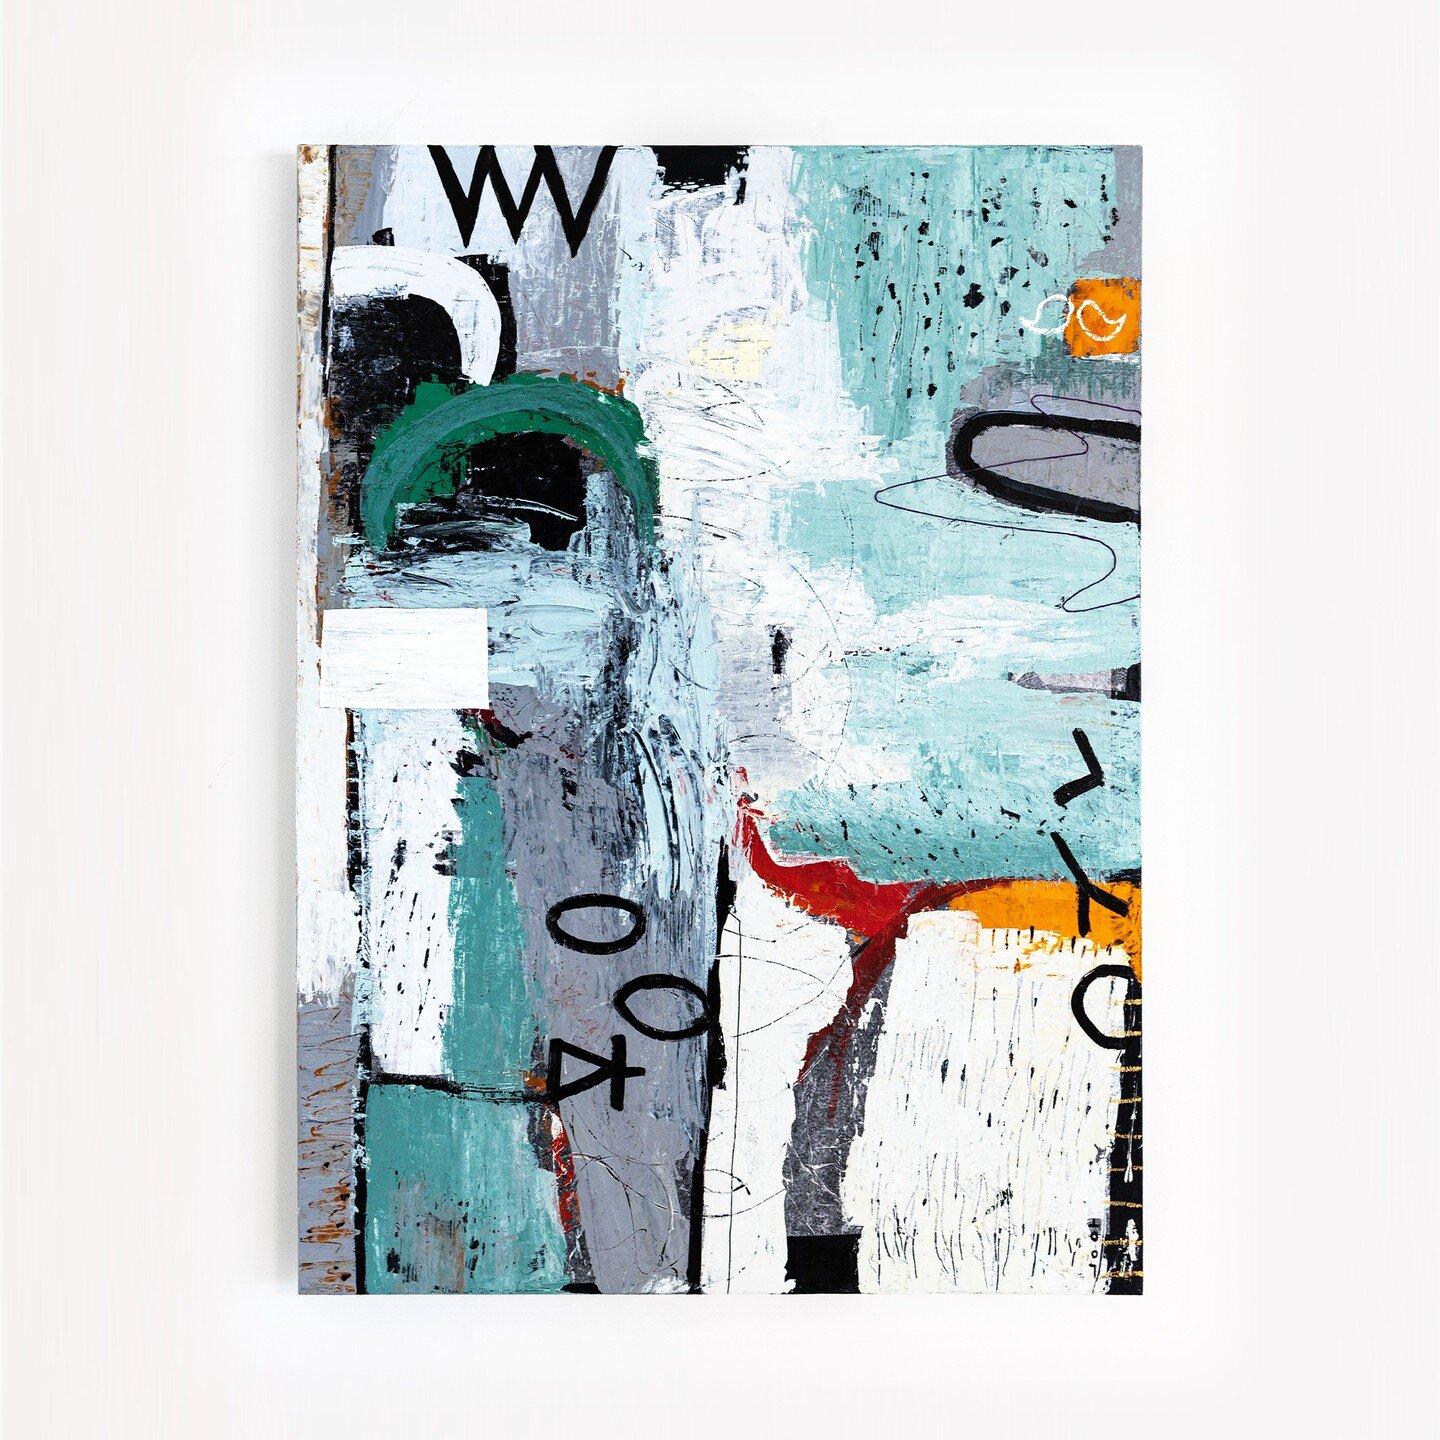 _New!
_Tajny
_36&quot;x48&quot; | 91x121cm
_Acrylic painting, oil pastel, pencil on canvas

#hyunahkimart #abstractartist #paintings #abstractartwork #abstractexpressionism #contemporaryartist #contemporarypainting #abstractpainting #acrylicpainting 